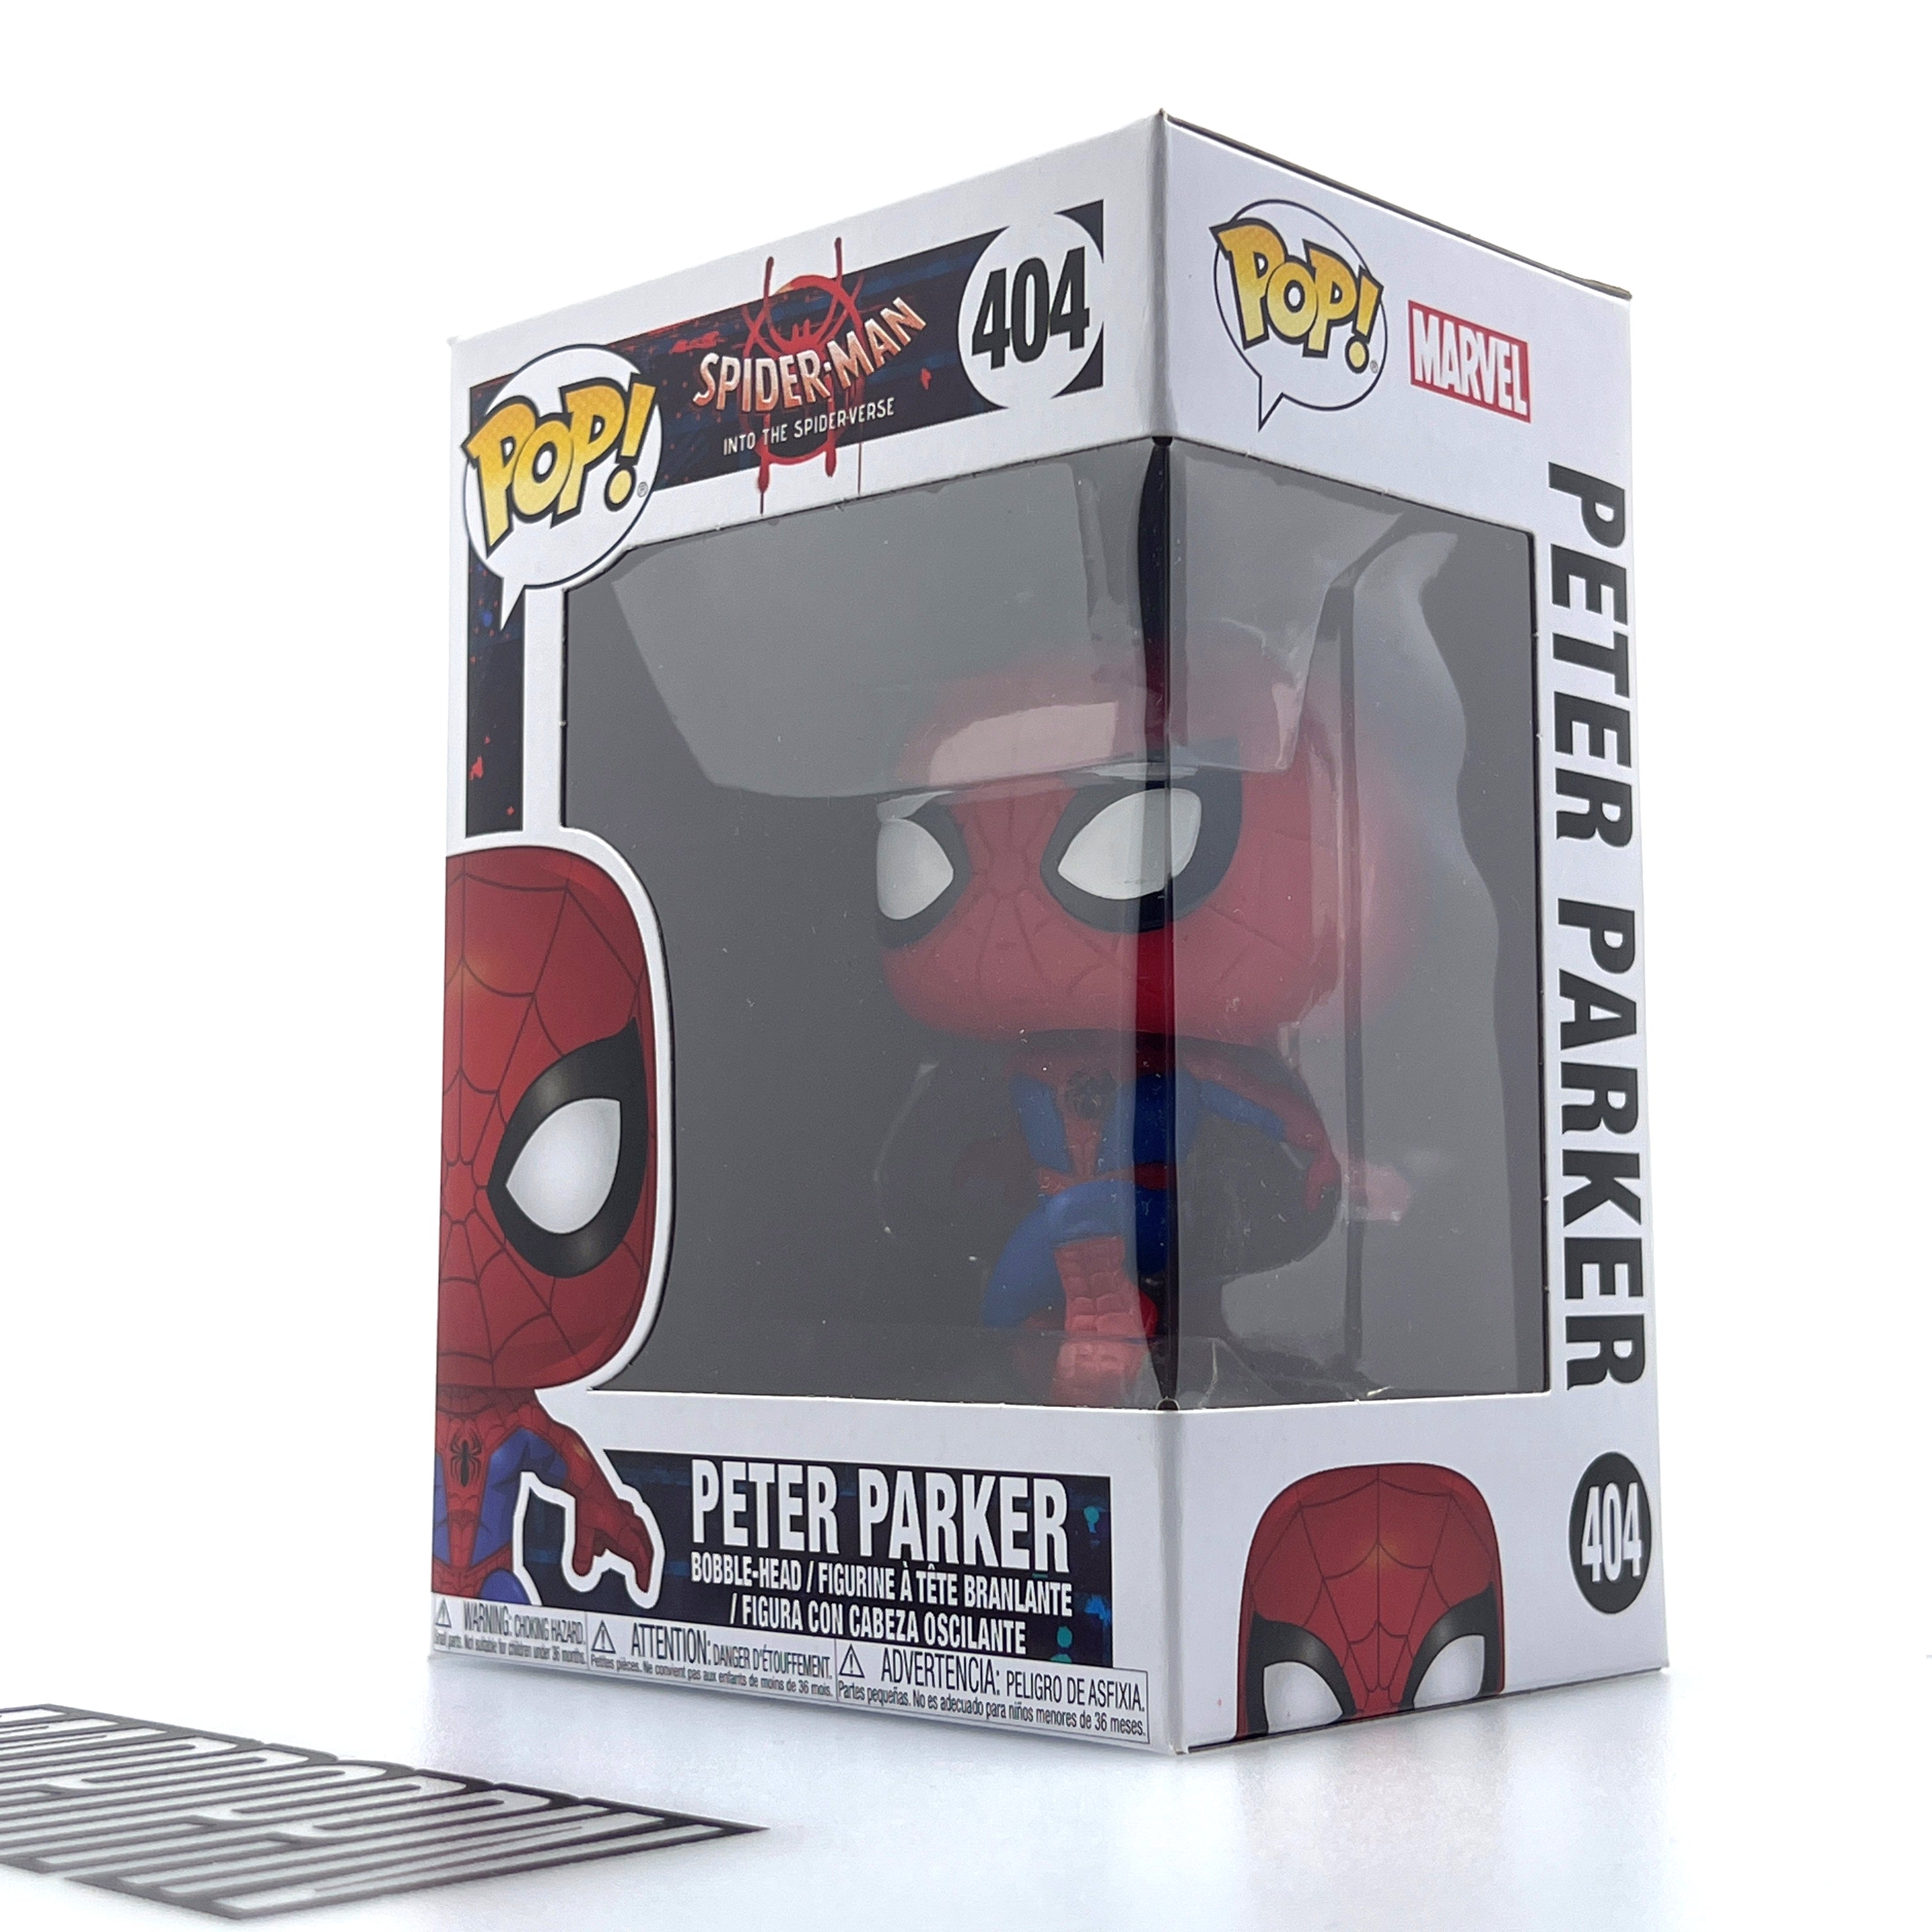 Funko Pop Marvel Spider-Man Into the Spider-Verse Peter Parker Vaulted 404